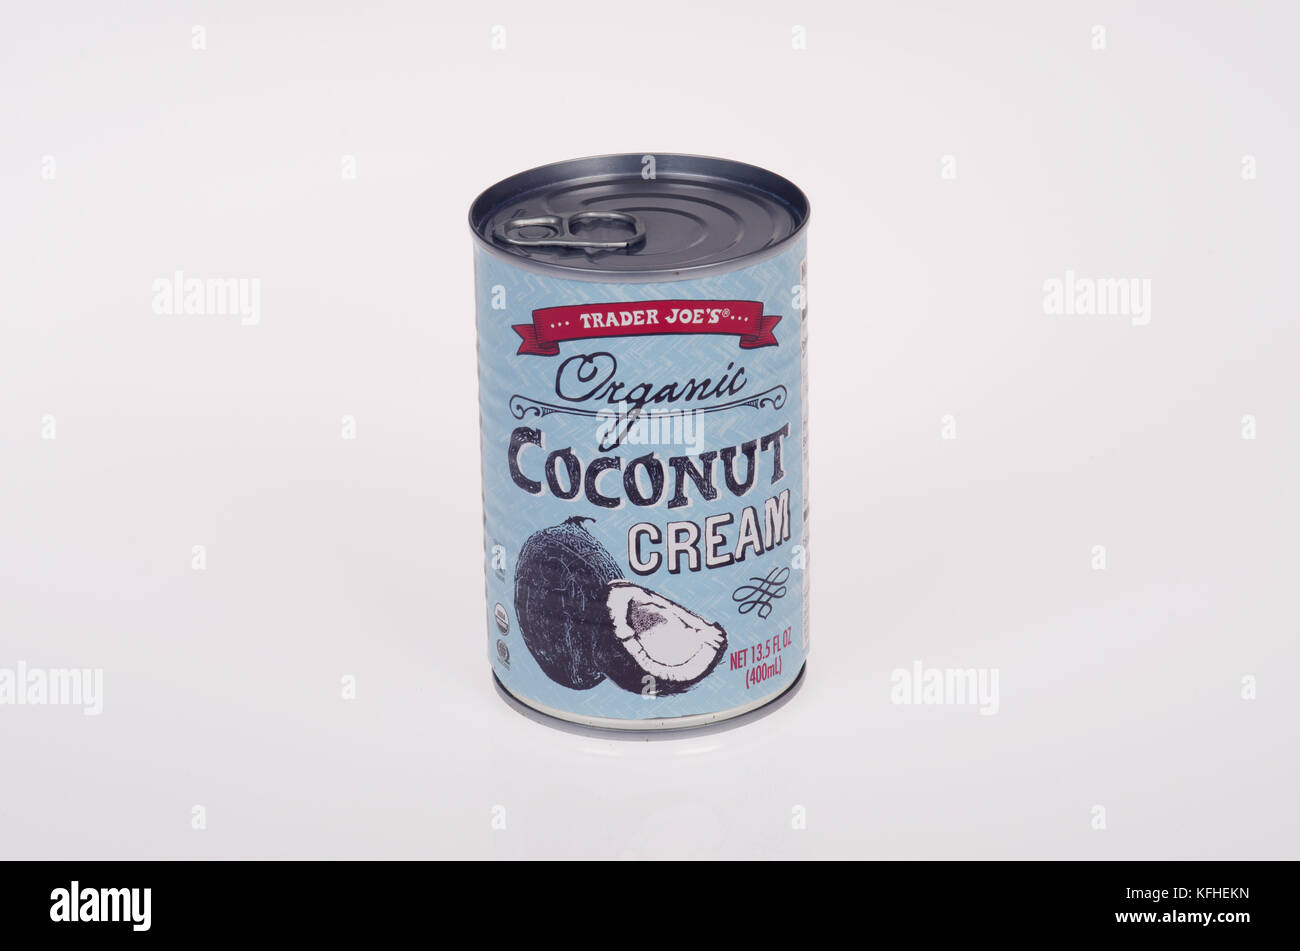 Trader Joe’s Organic coconut cream can Stock Photo